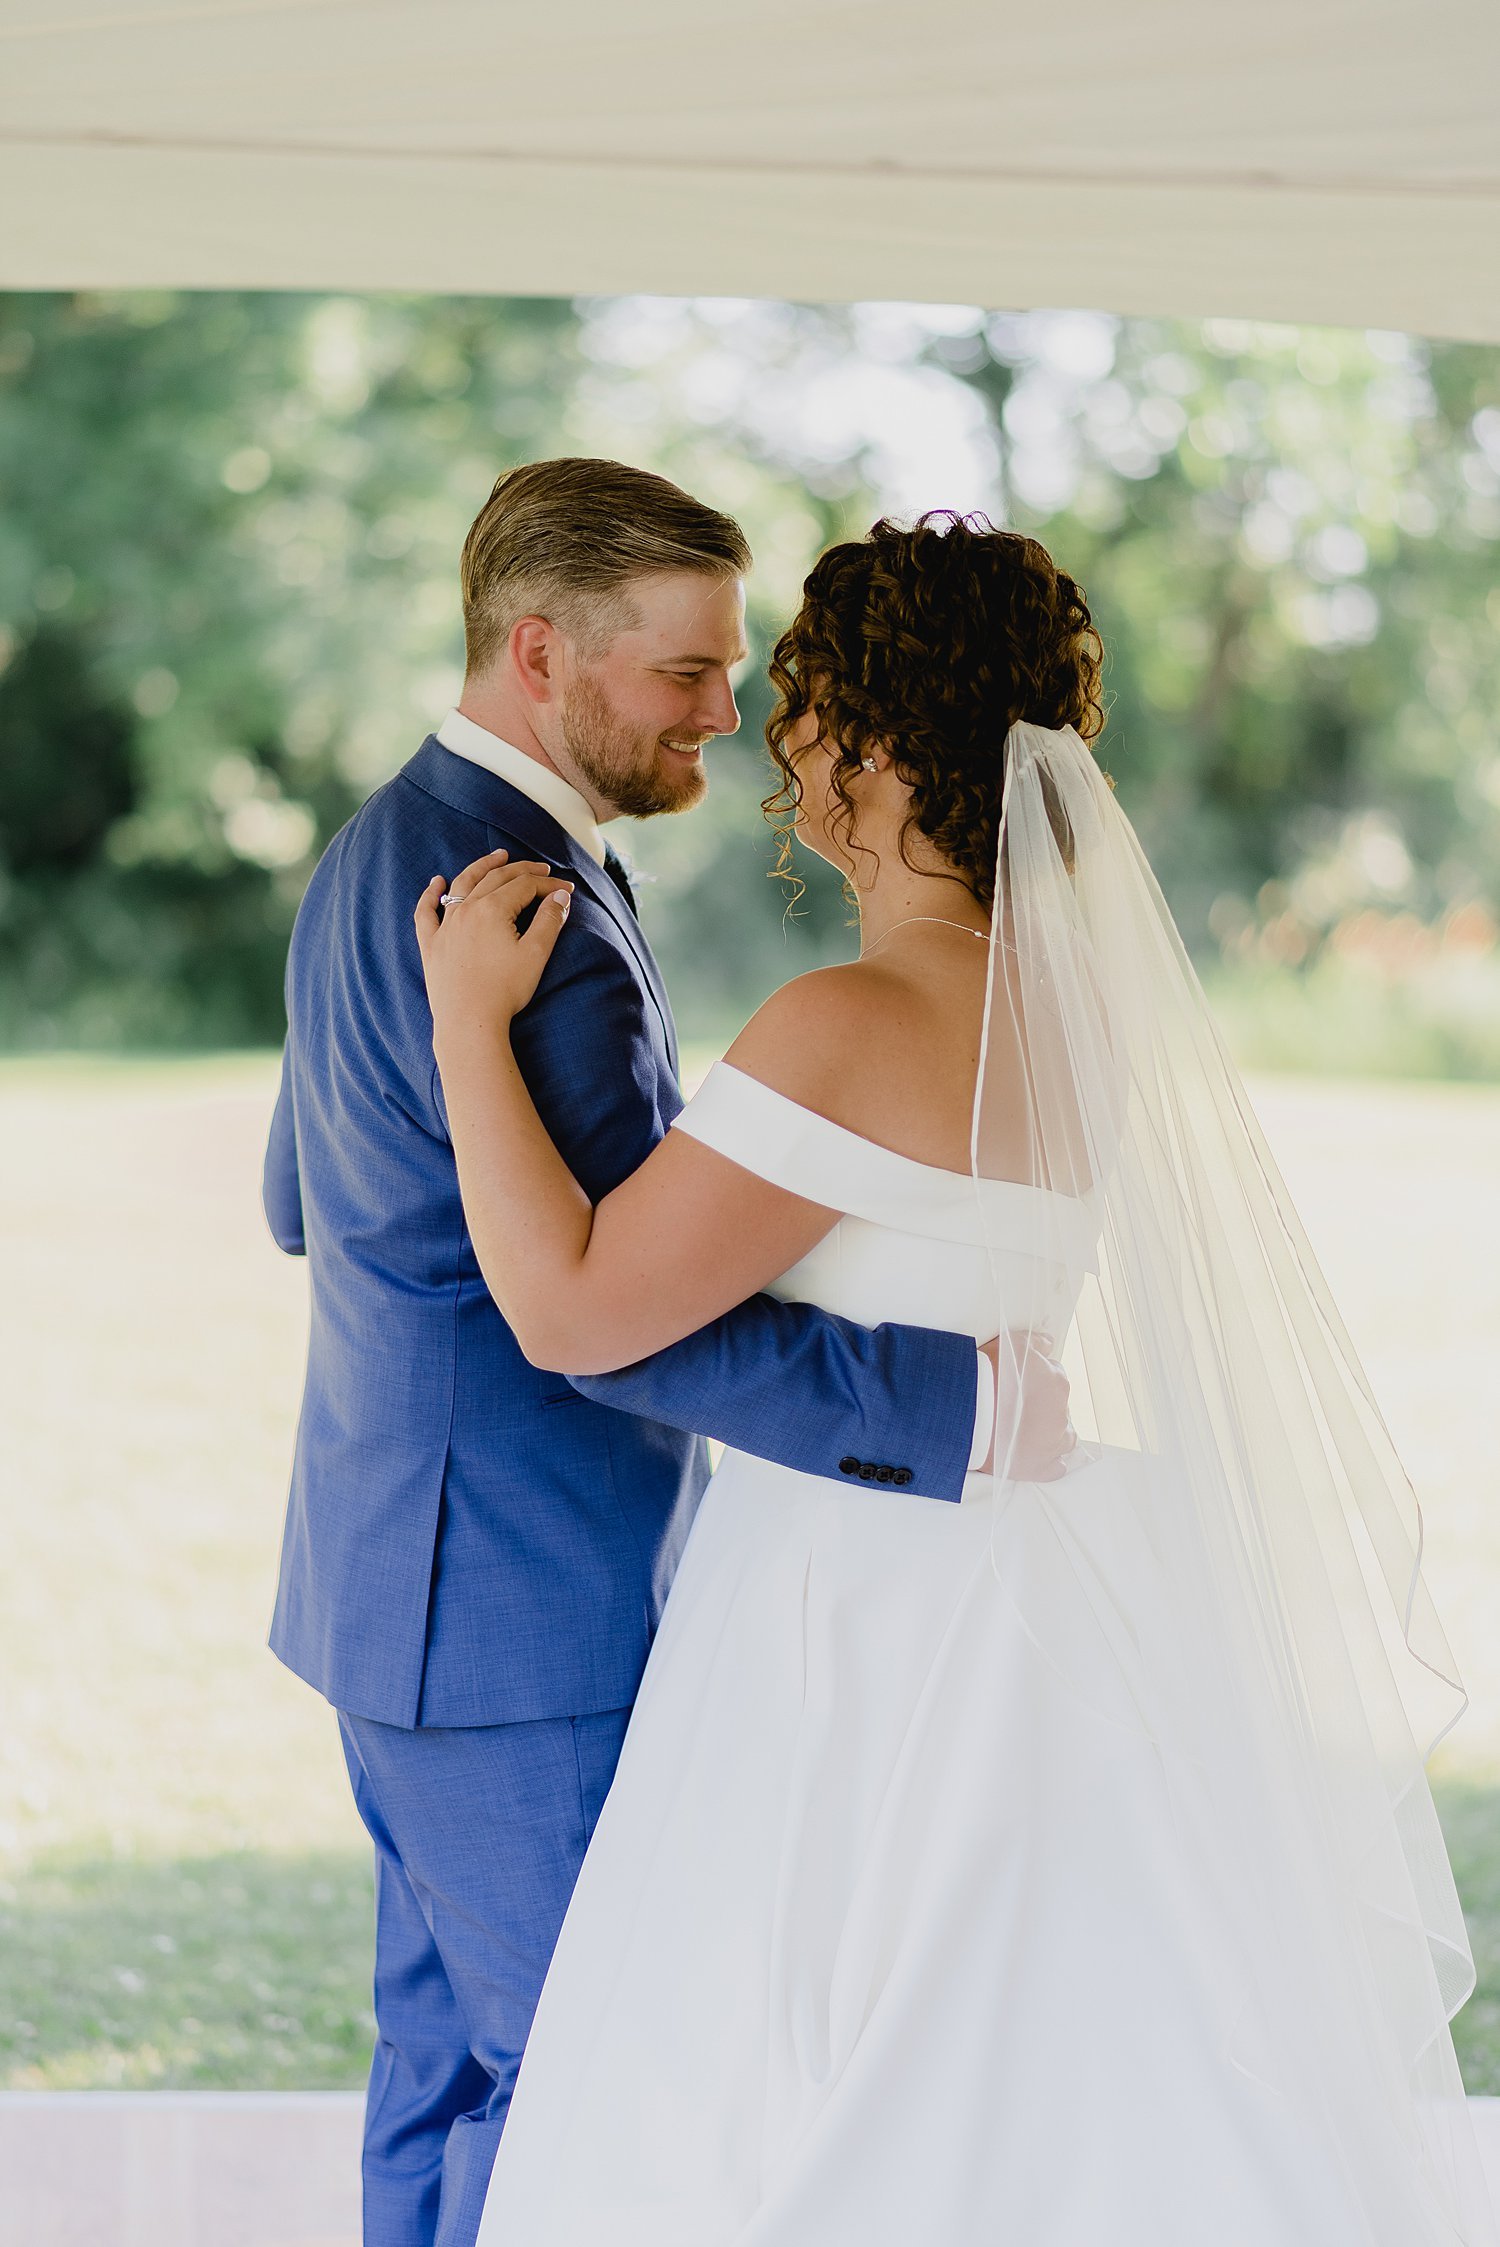 Elegant Summer Backyard Tented Wedding in Sydenham, Ontario | Prince Edward County Wedding Photographer | Holly McMurter Photographs_0079.jpg